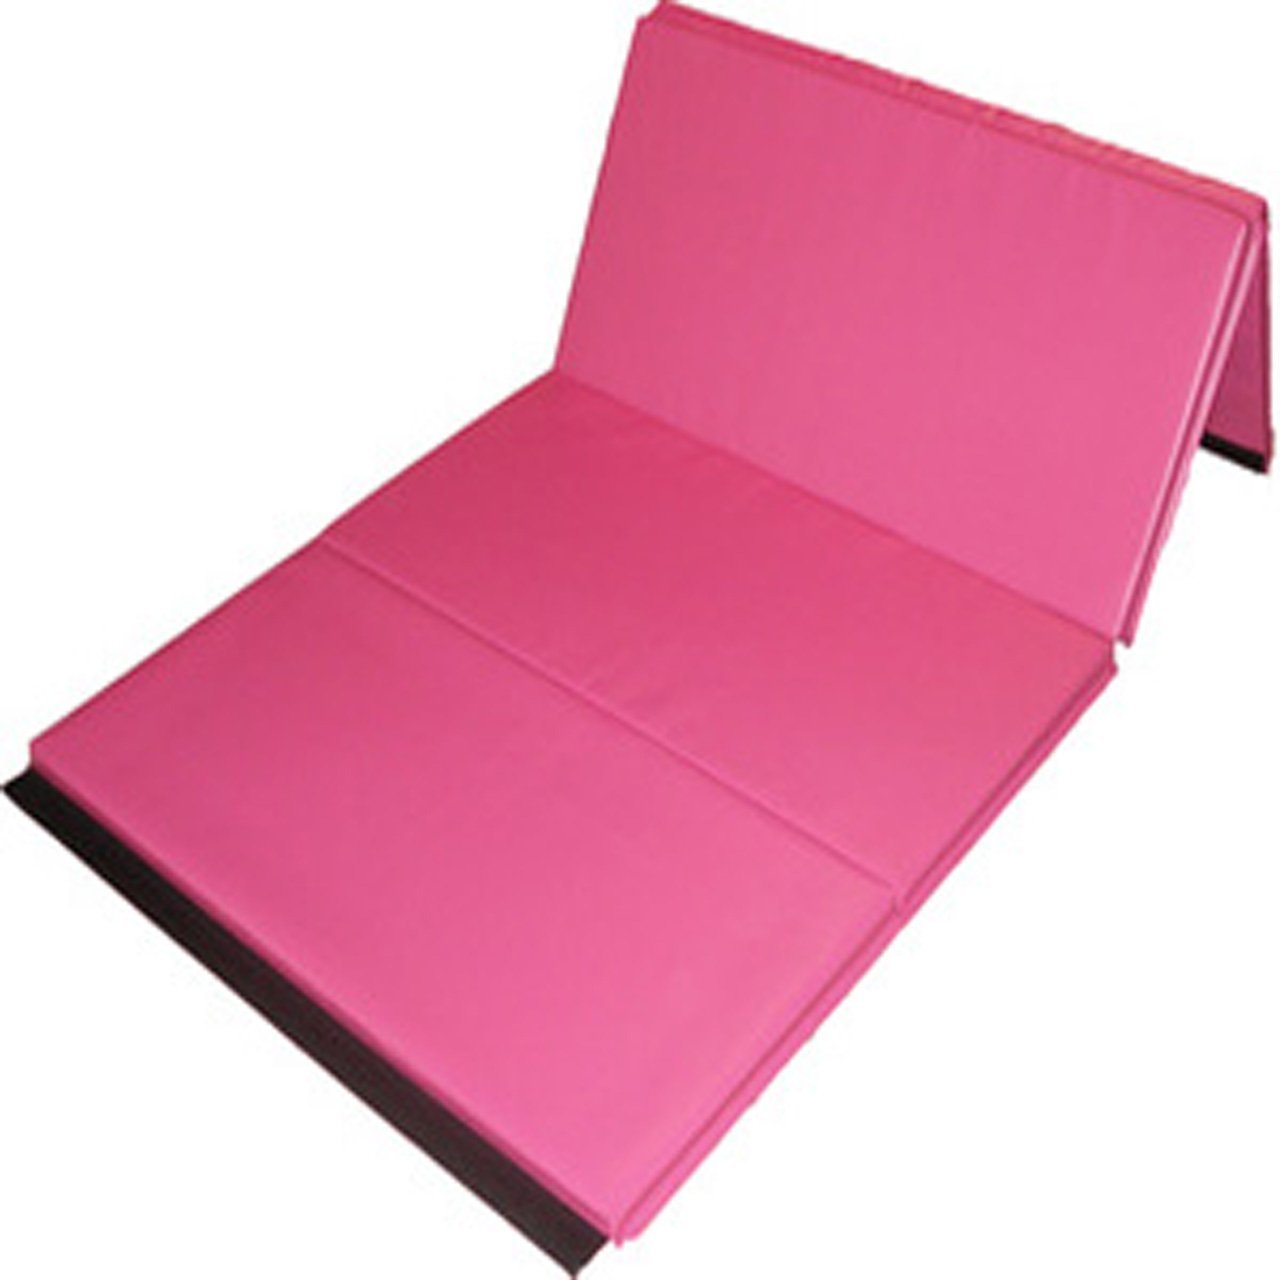 10x10 Mat for 20x20 Frame - Precut Mat Board Acid-Free Soft Pink